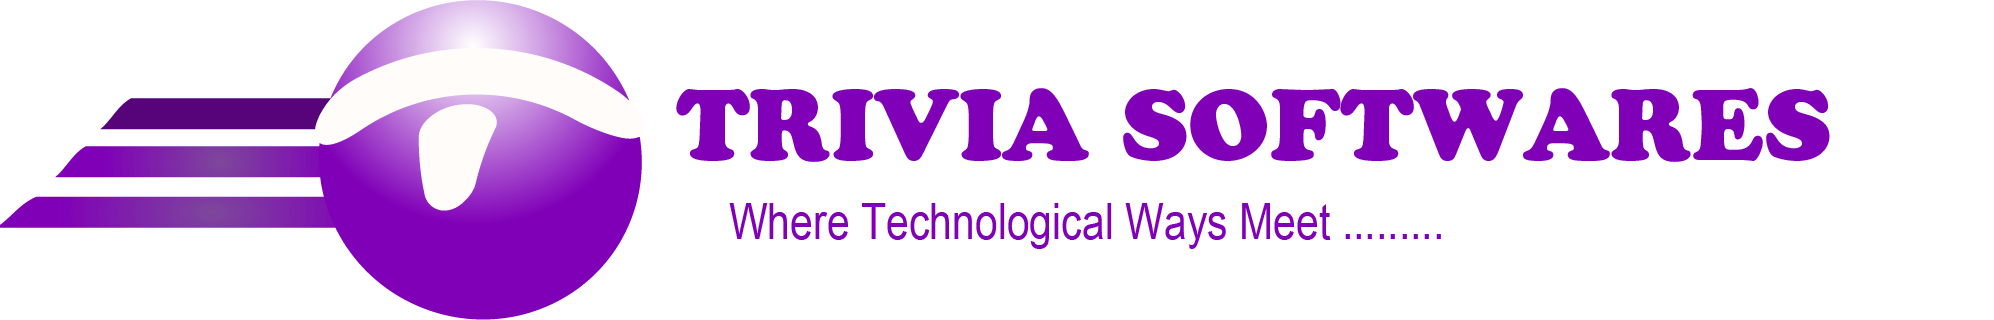 Trivia Softwares